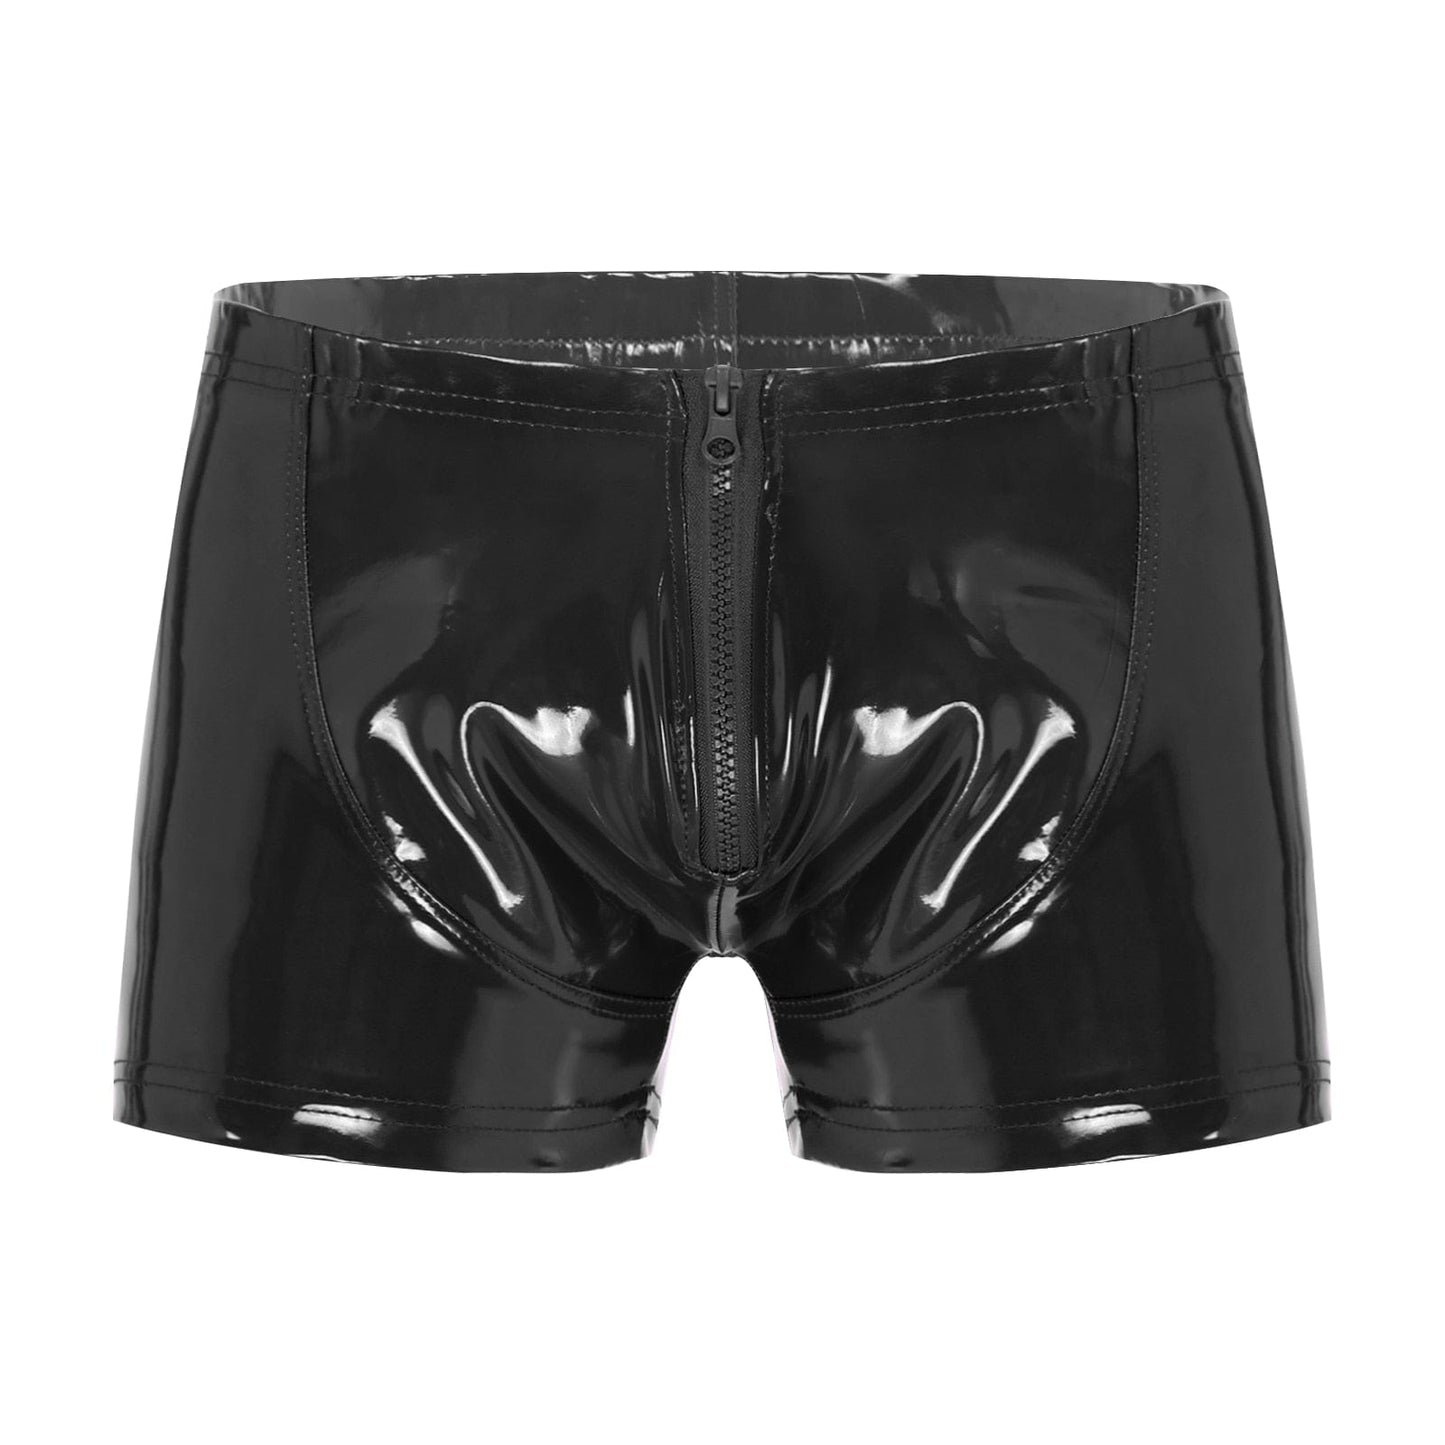 Kinky Cloth Black / M / 1pc Zipper Front Boxer Briefs Shorts